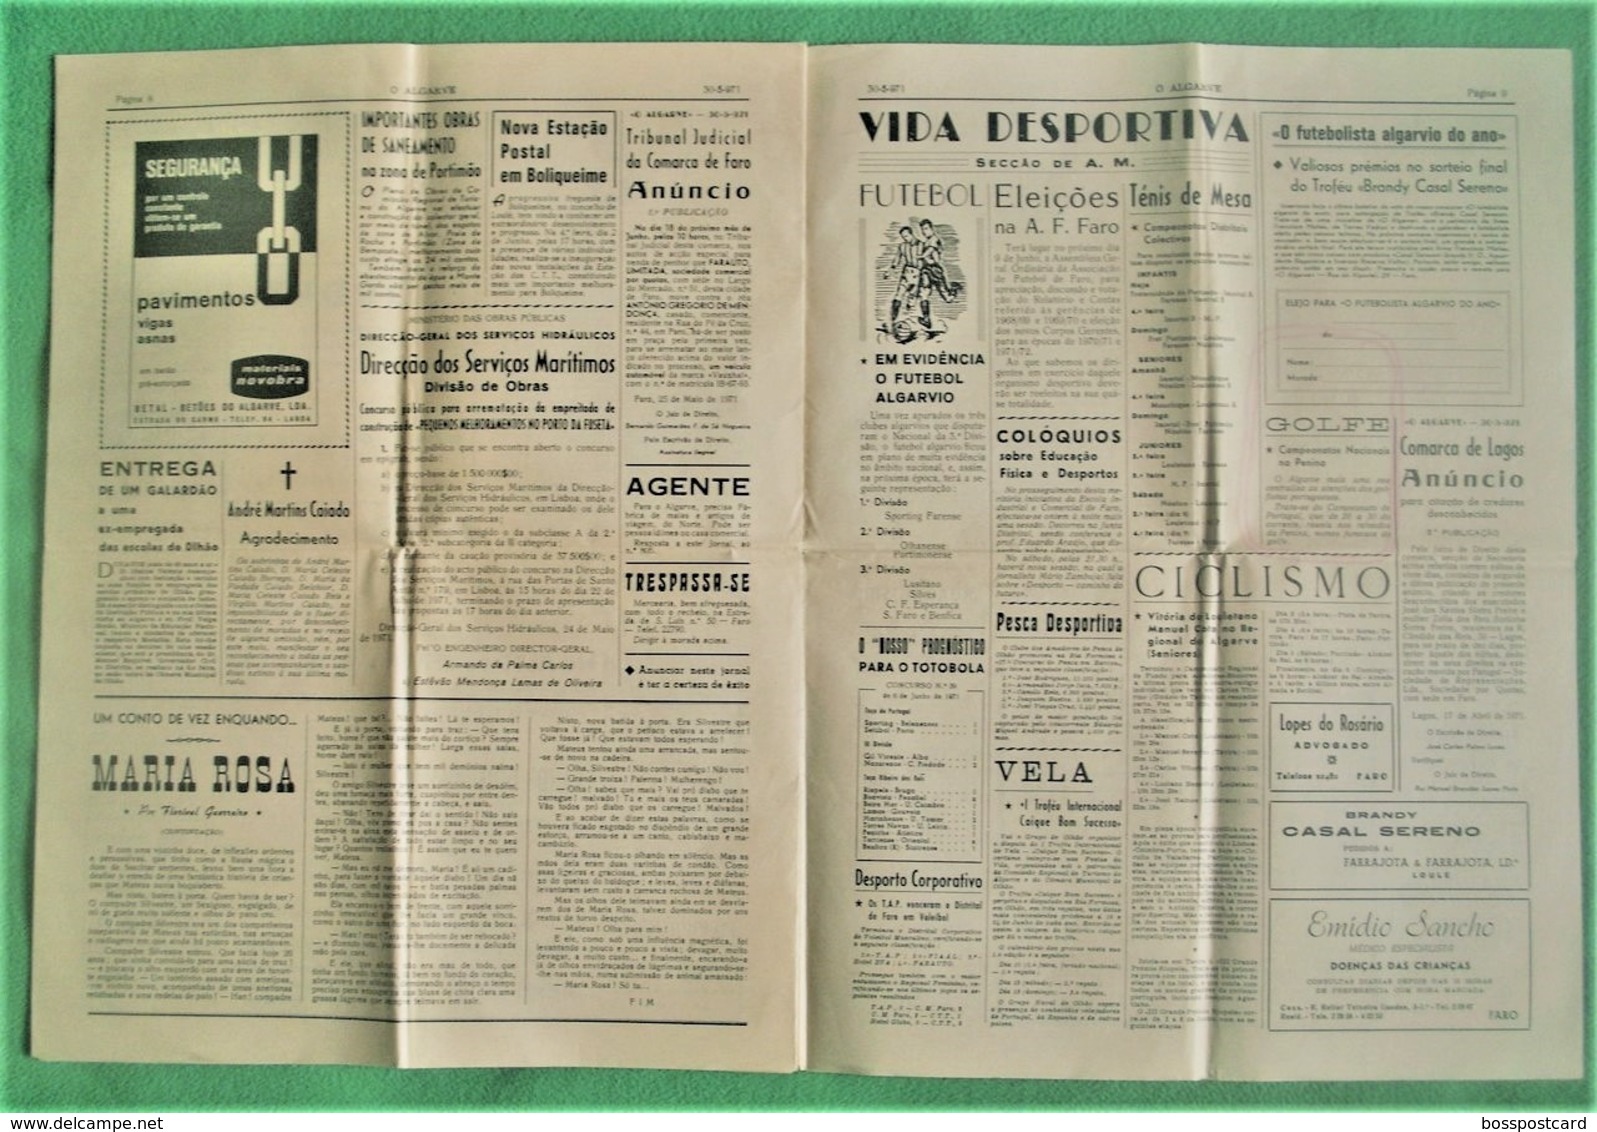 Faro - Jornal O Algarve Nº 3296 De 30 De Maio De 1971 - Algemene Informatie